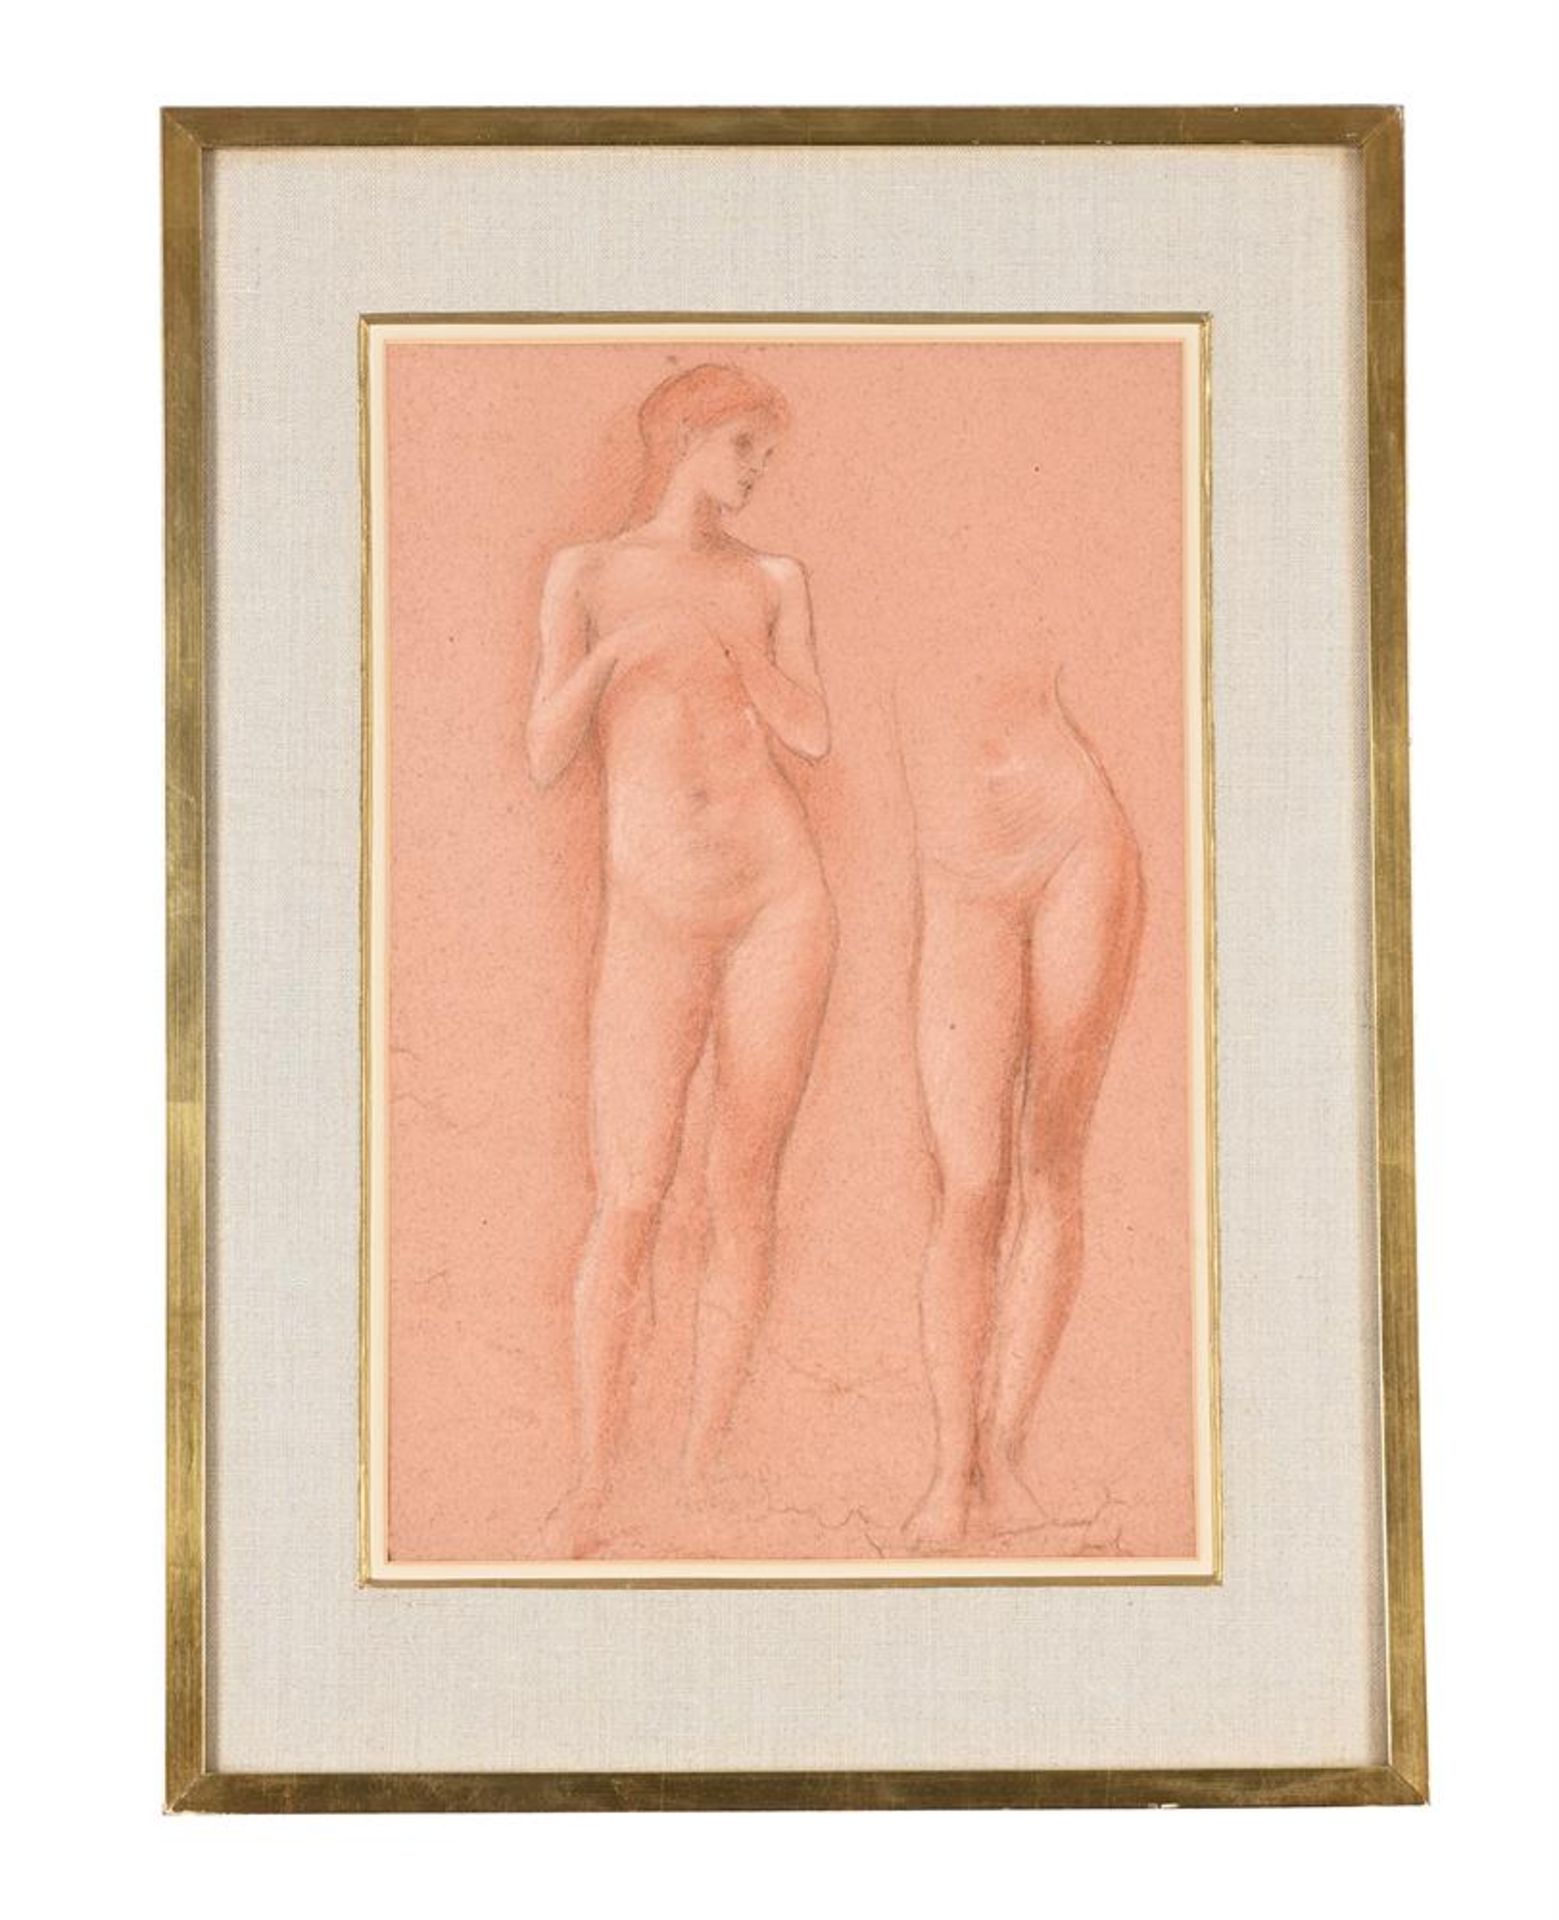 EDWARD COLEY BURNE-JONES (BRITISH 1833-1898), TWO STUDIES OF FEMALE NUDES FOR VENUS CONCORDIA - Image 5 of 7